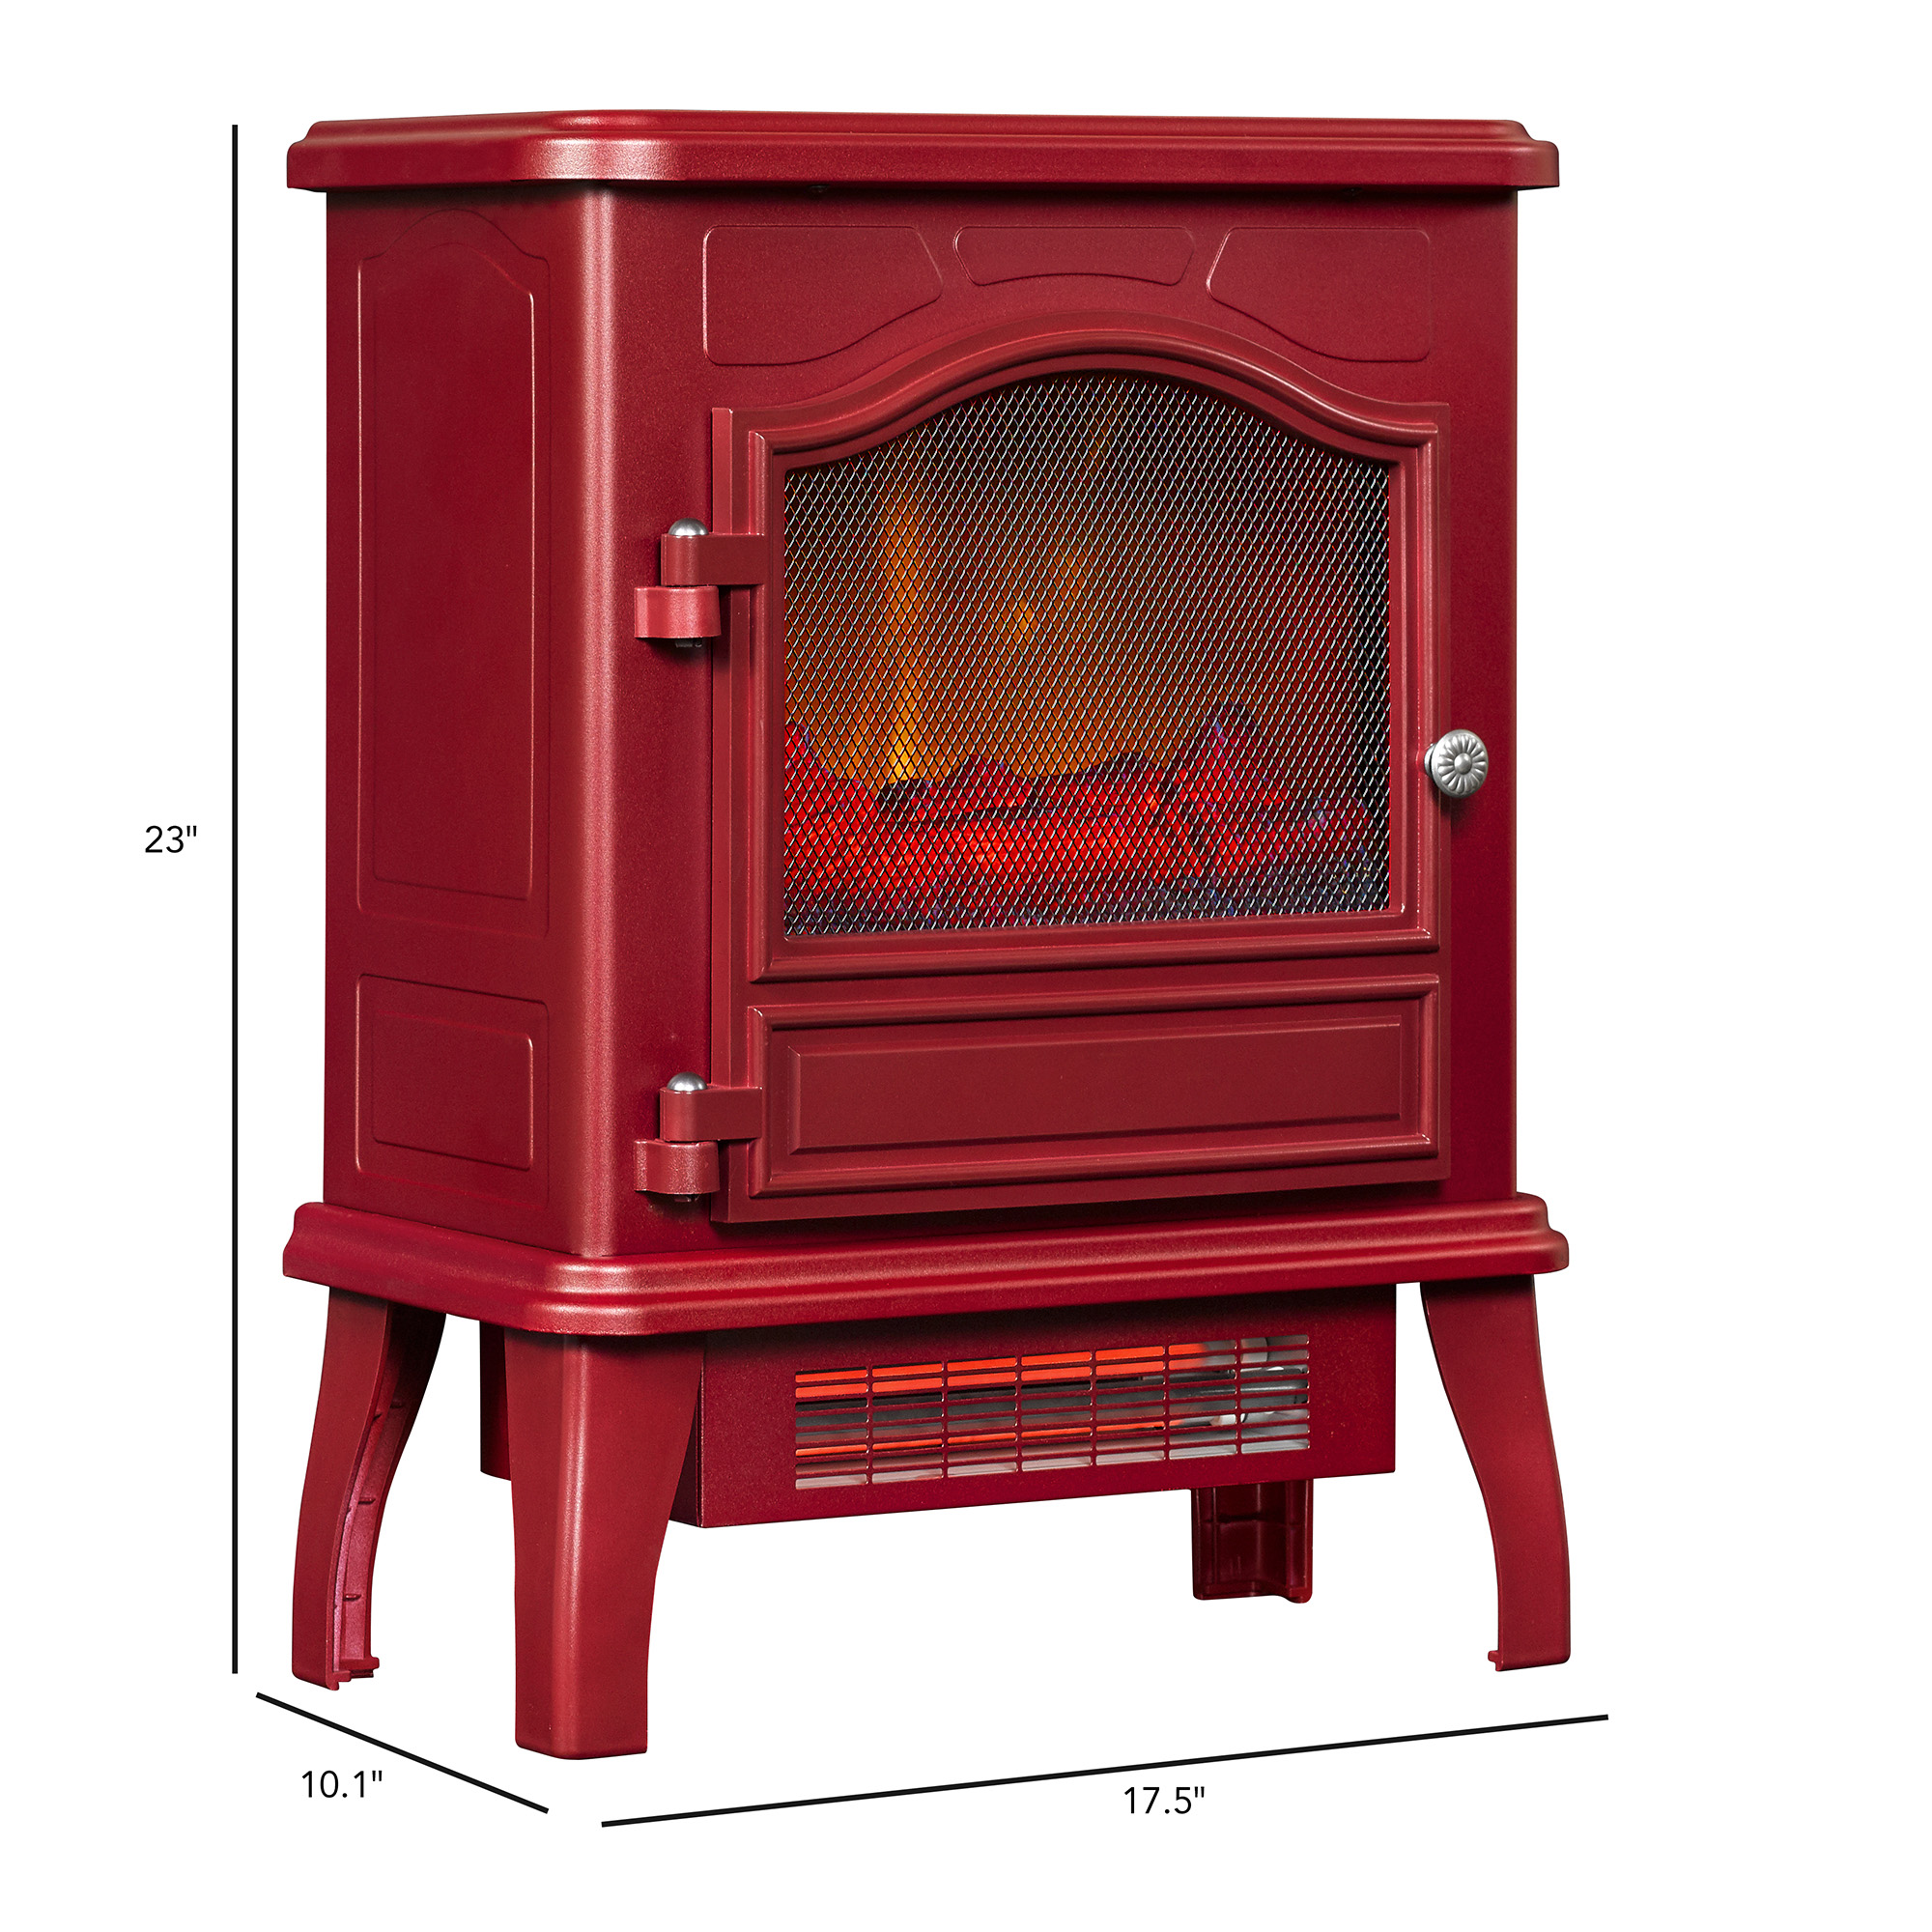 ChimneyFree Powerheat Infrared Quartz Electric Stove Heater, 1500W, Cinnamon - image 2 of 16